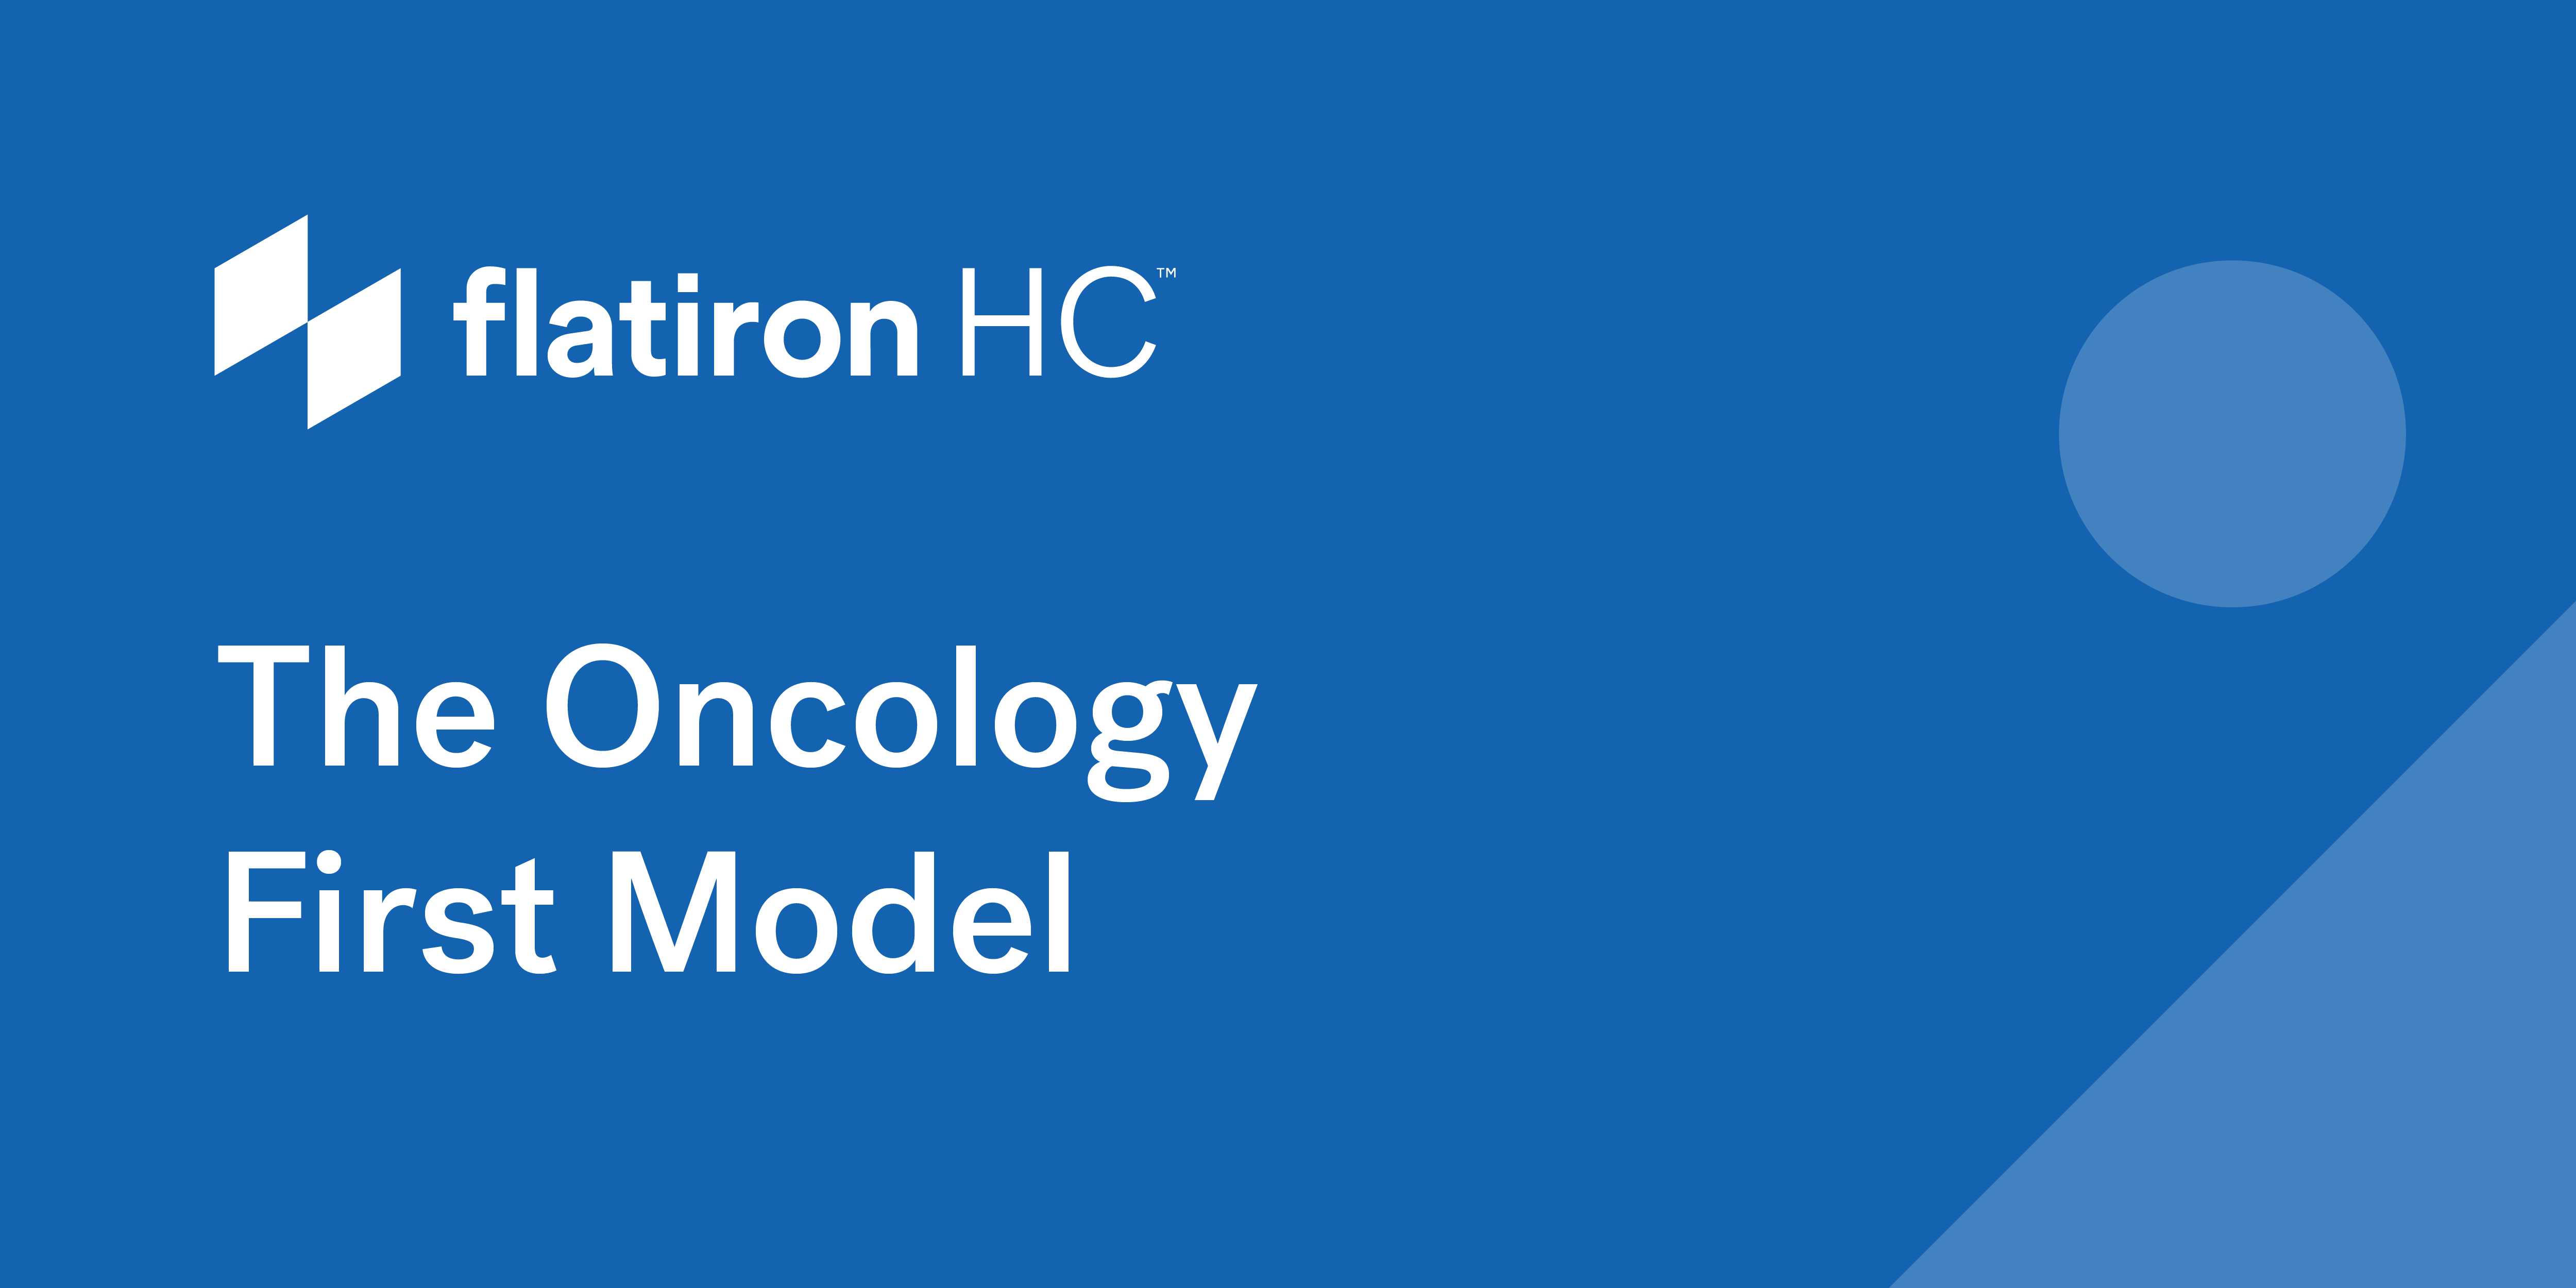 Thumbnail image: Flatiron HC logo, The Oncology First Model